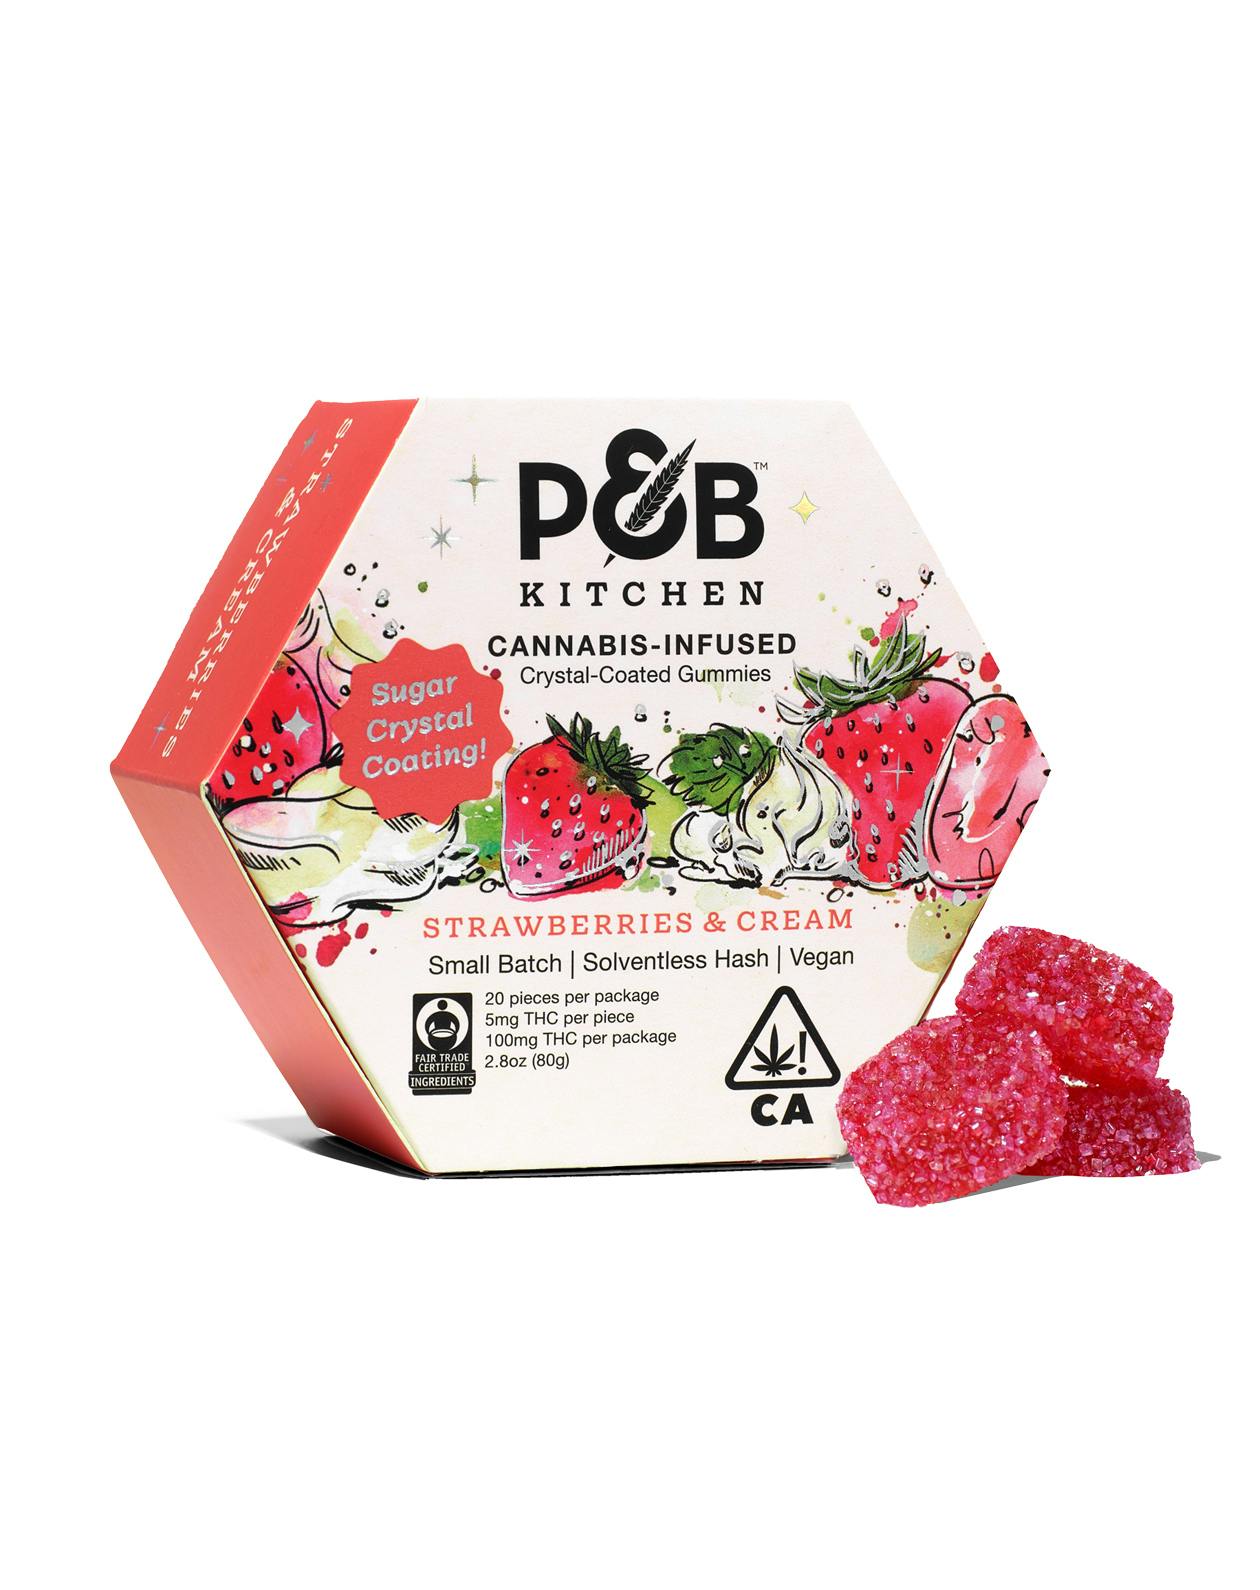 PB Kitchen Gummies Strawberries Cream CC 01 PDP